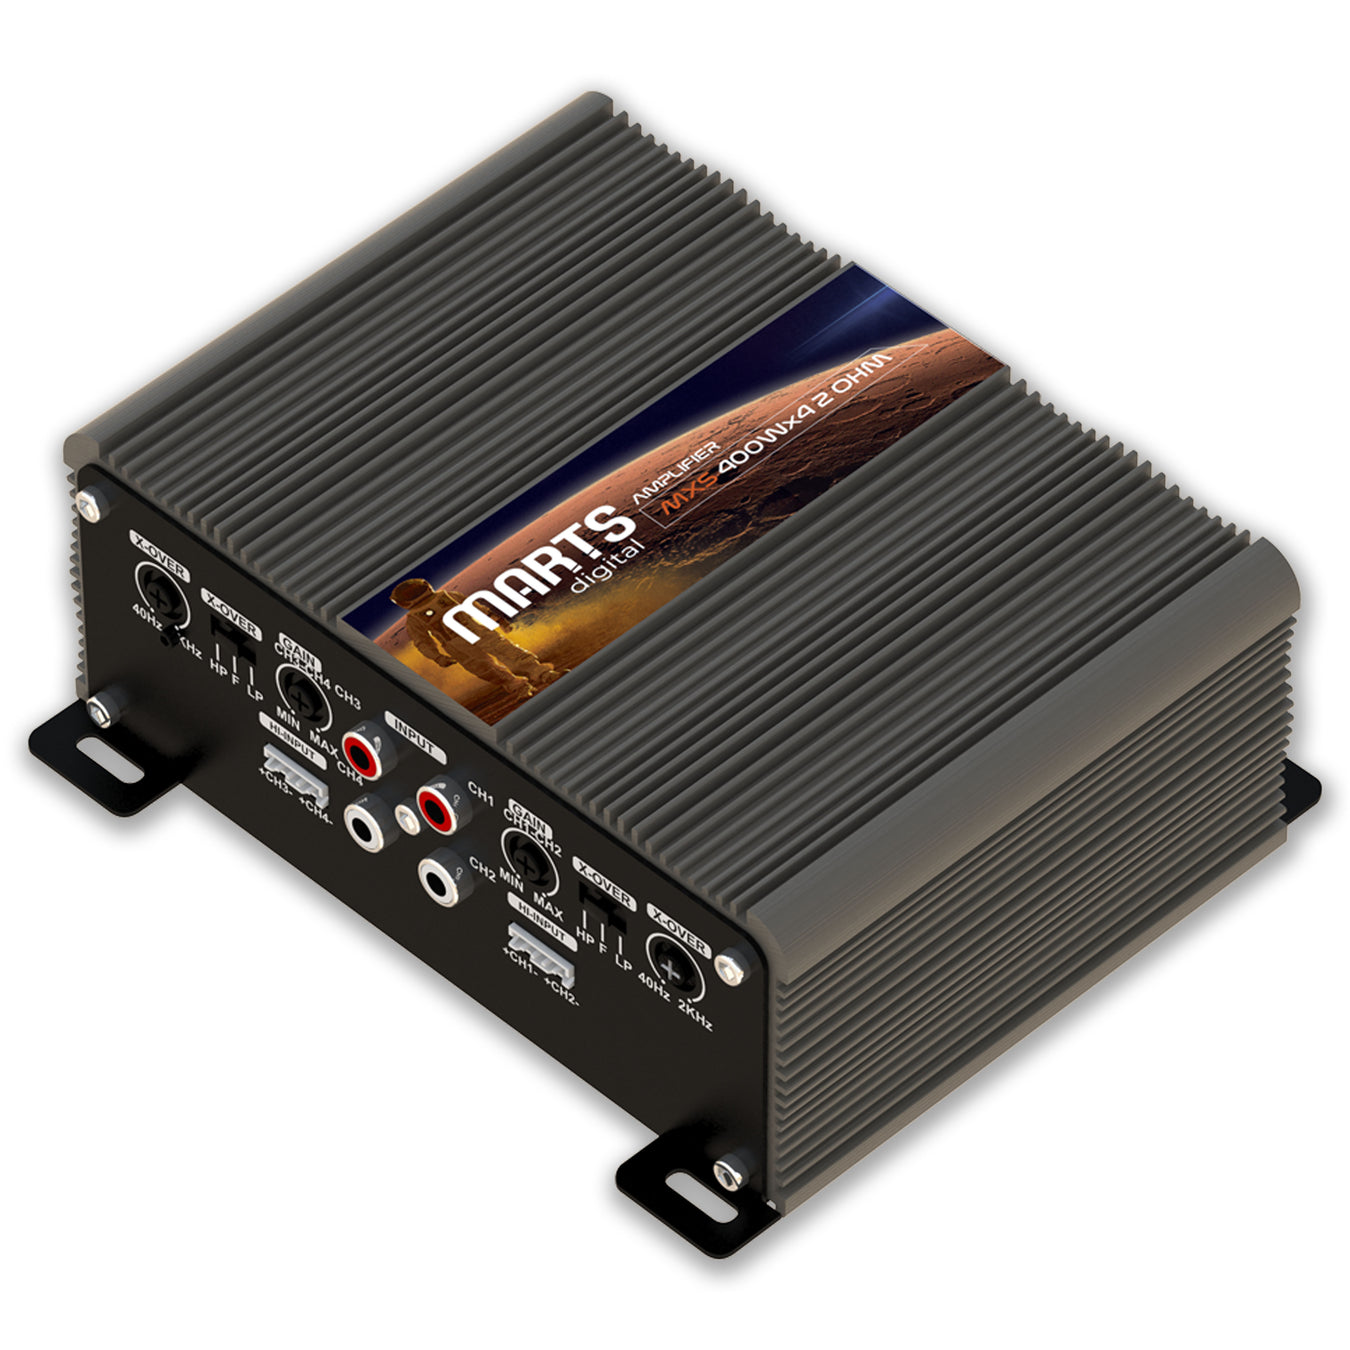 Marts Digital MXS Series Amplifiers